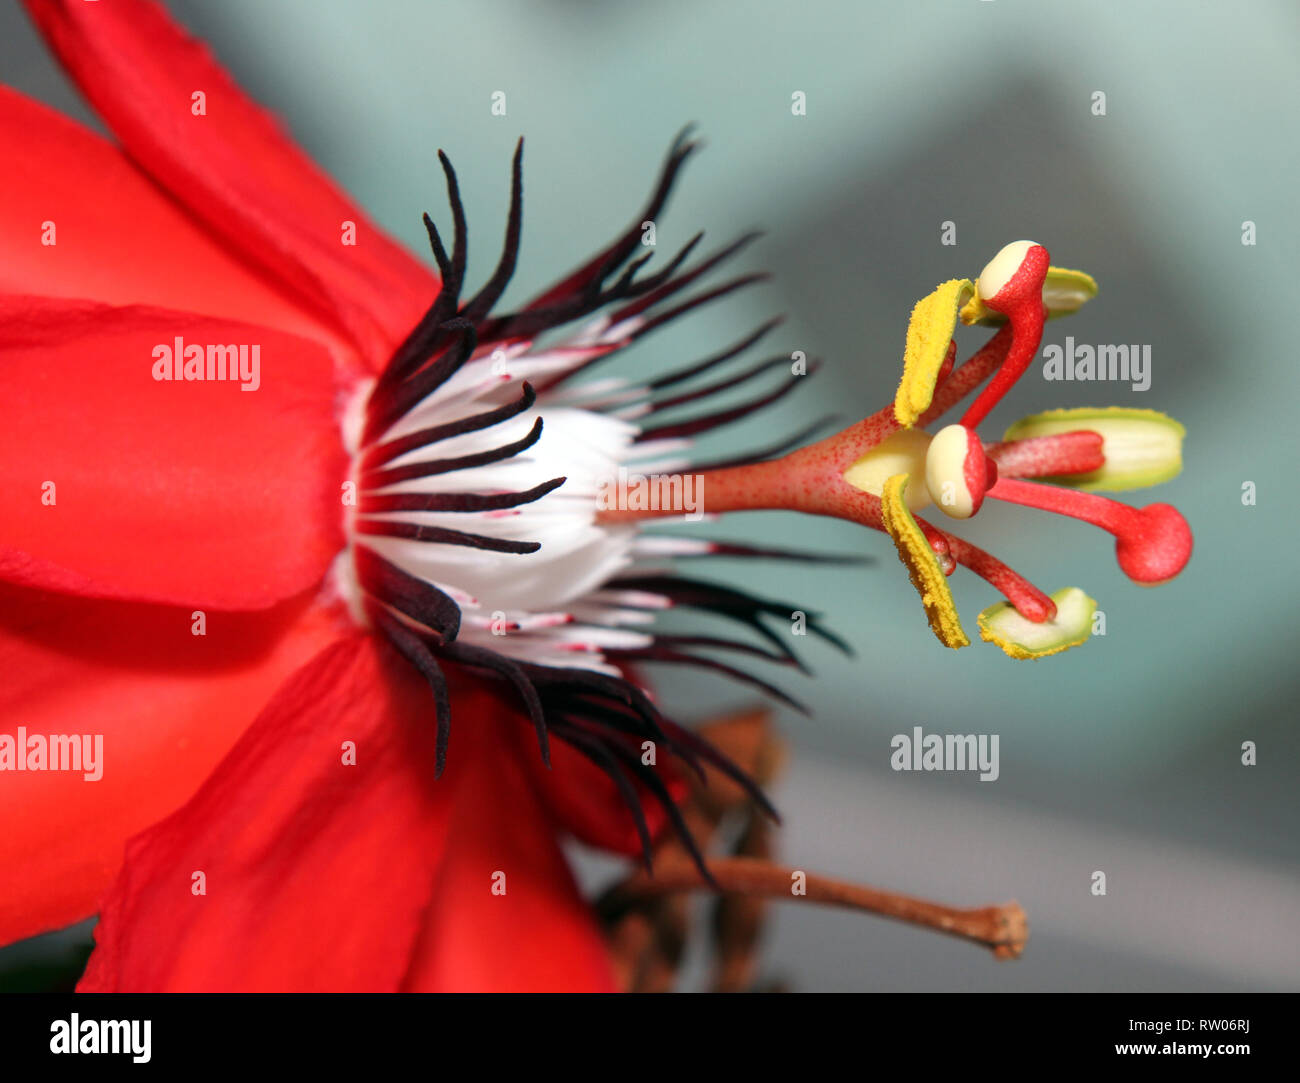 Passiflora flower macro image Stock Photo